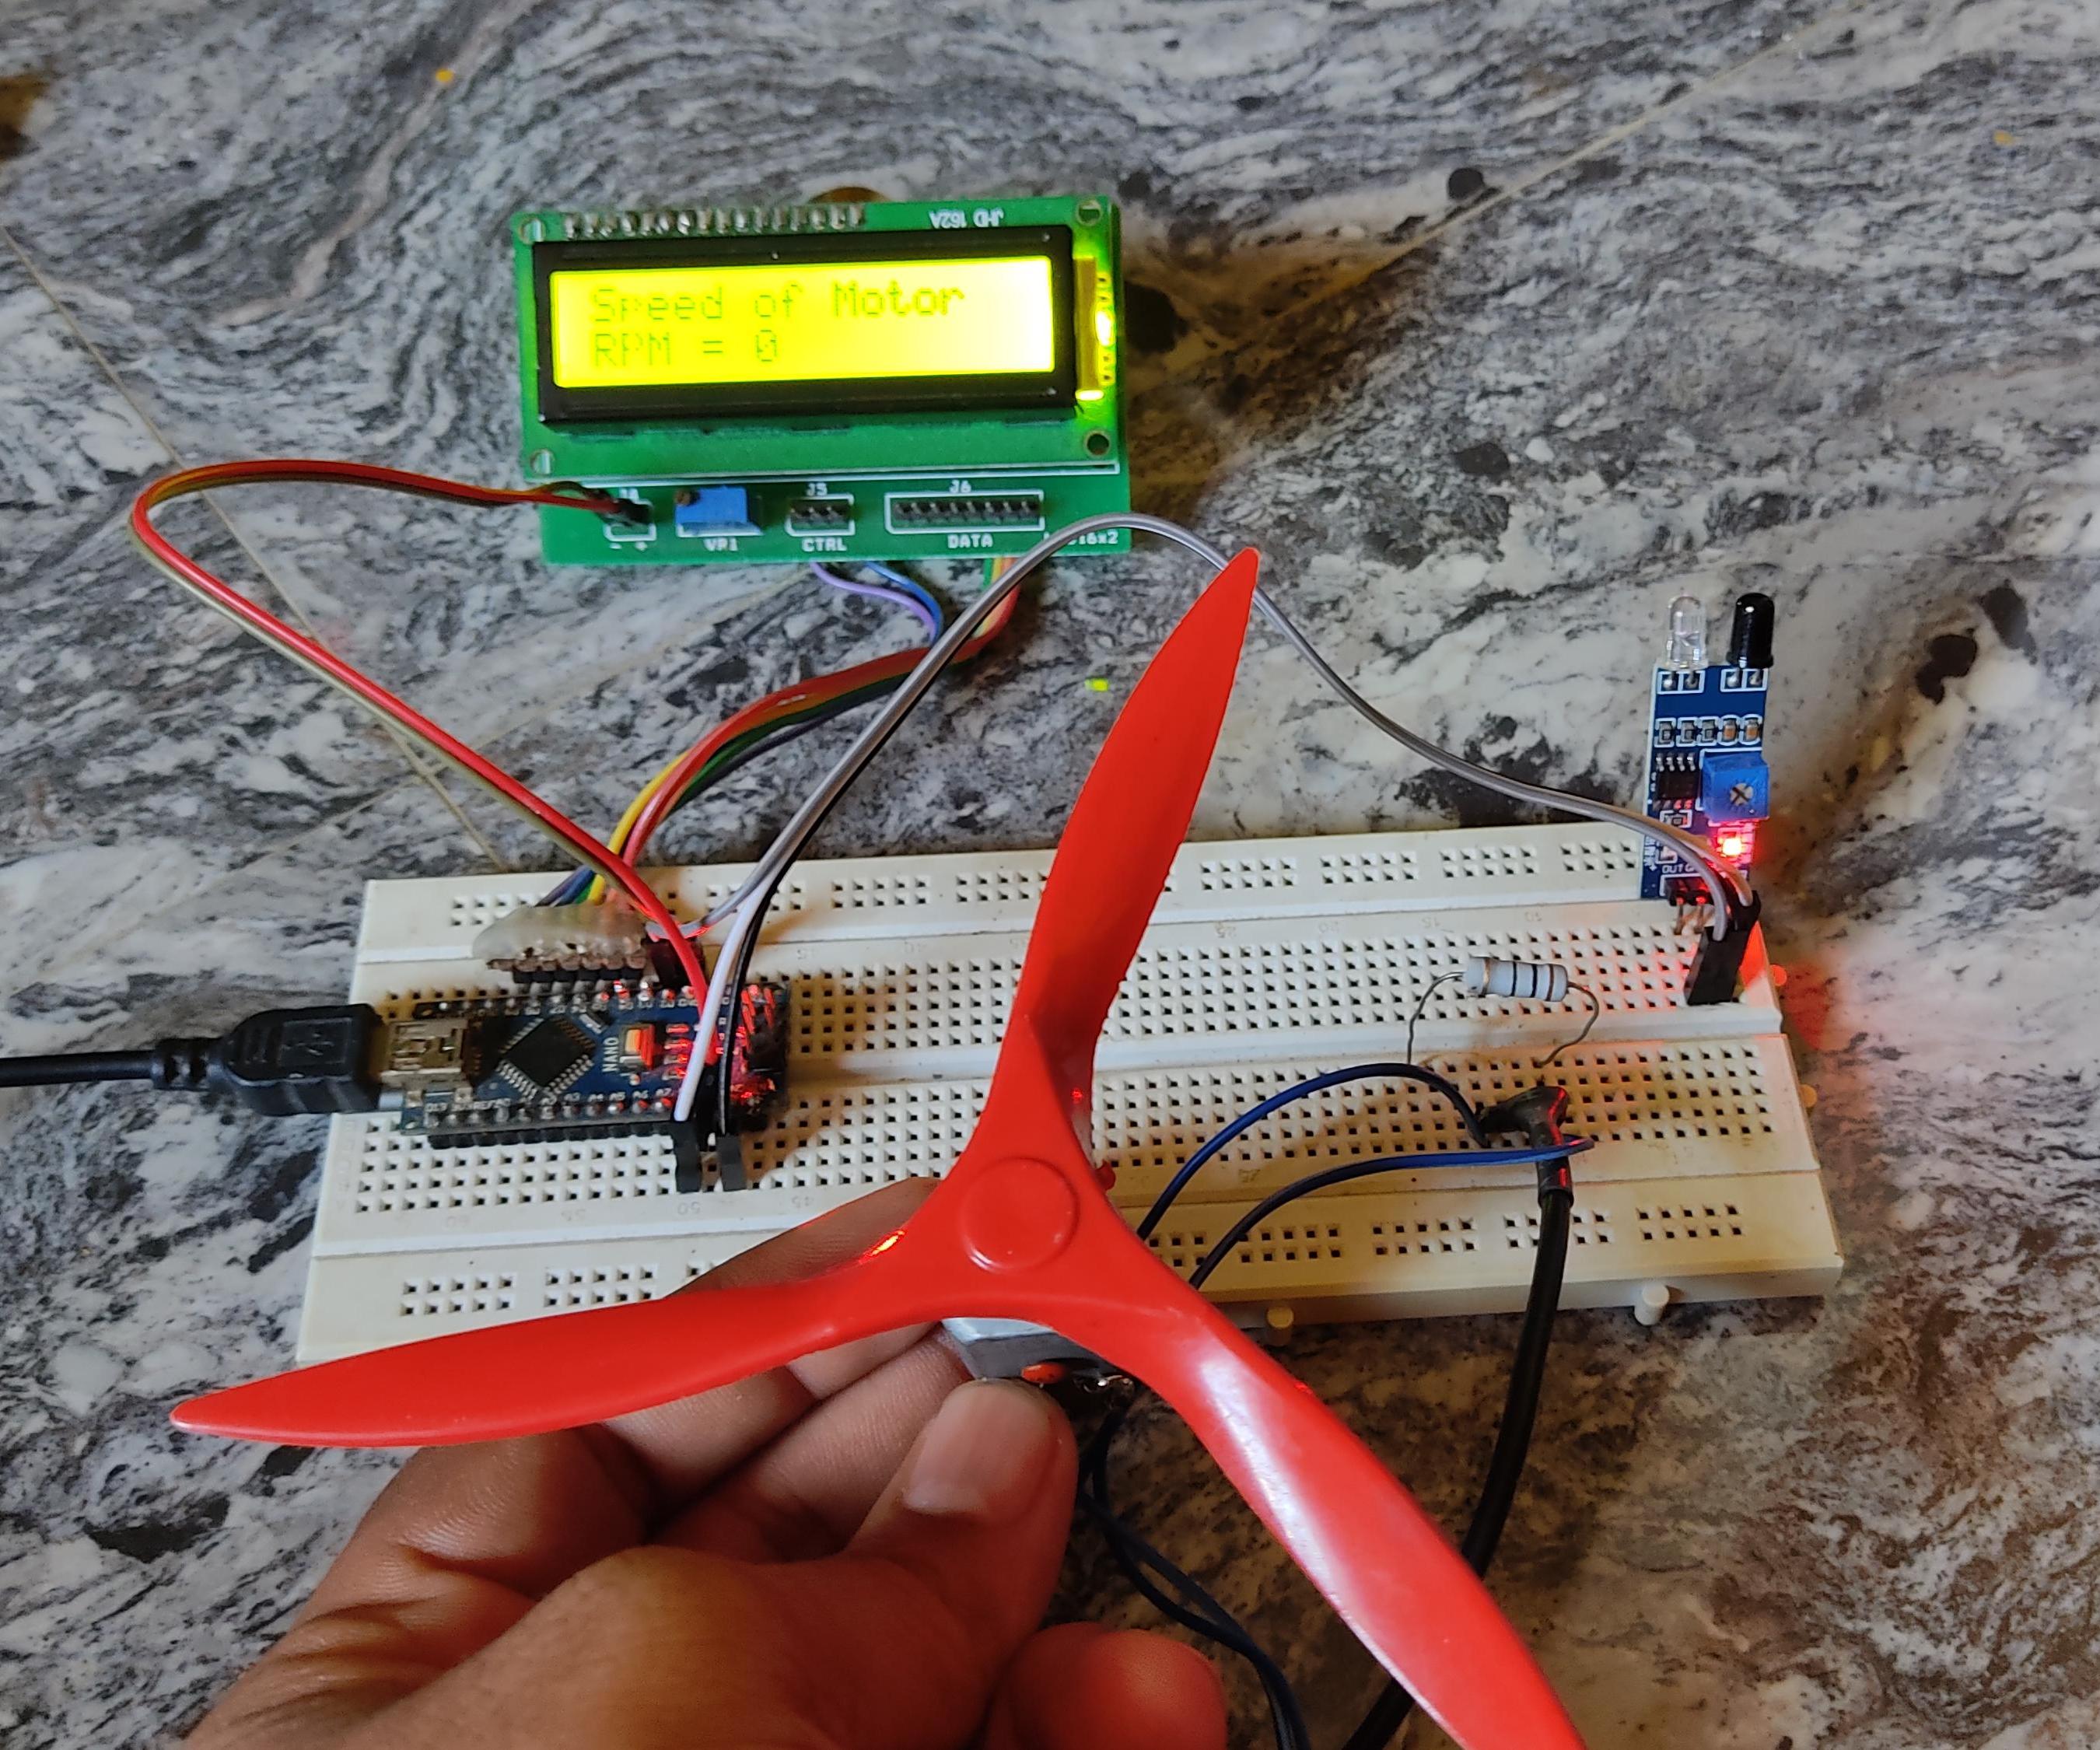 Motor Speed Measurement Using Arduino